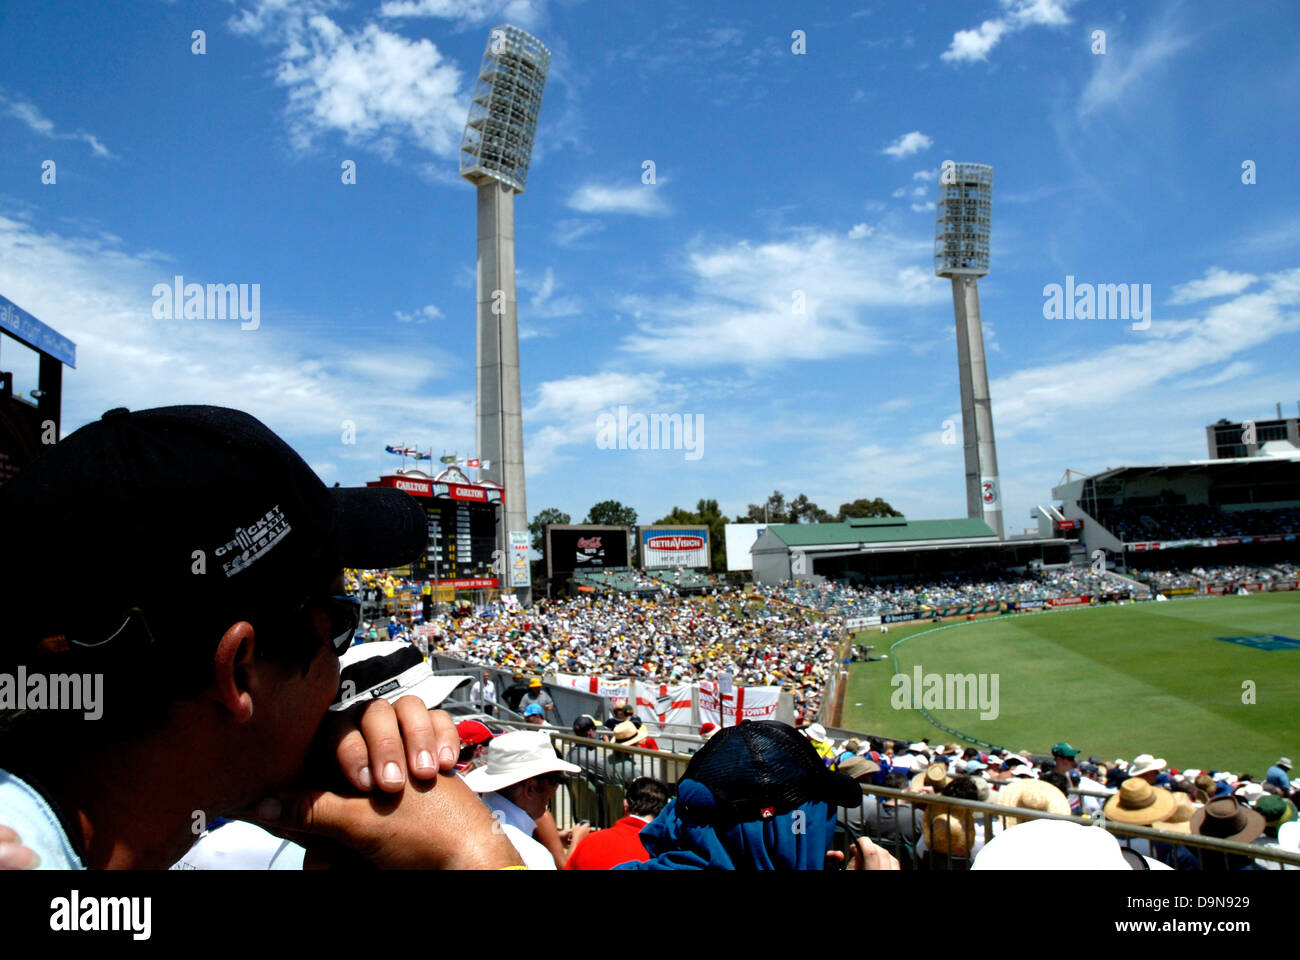 Fans watching Australia versus England Test Cricket match at the WACA ground, Perth, Western Australia, Australia Stock Photo